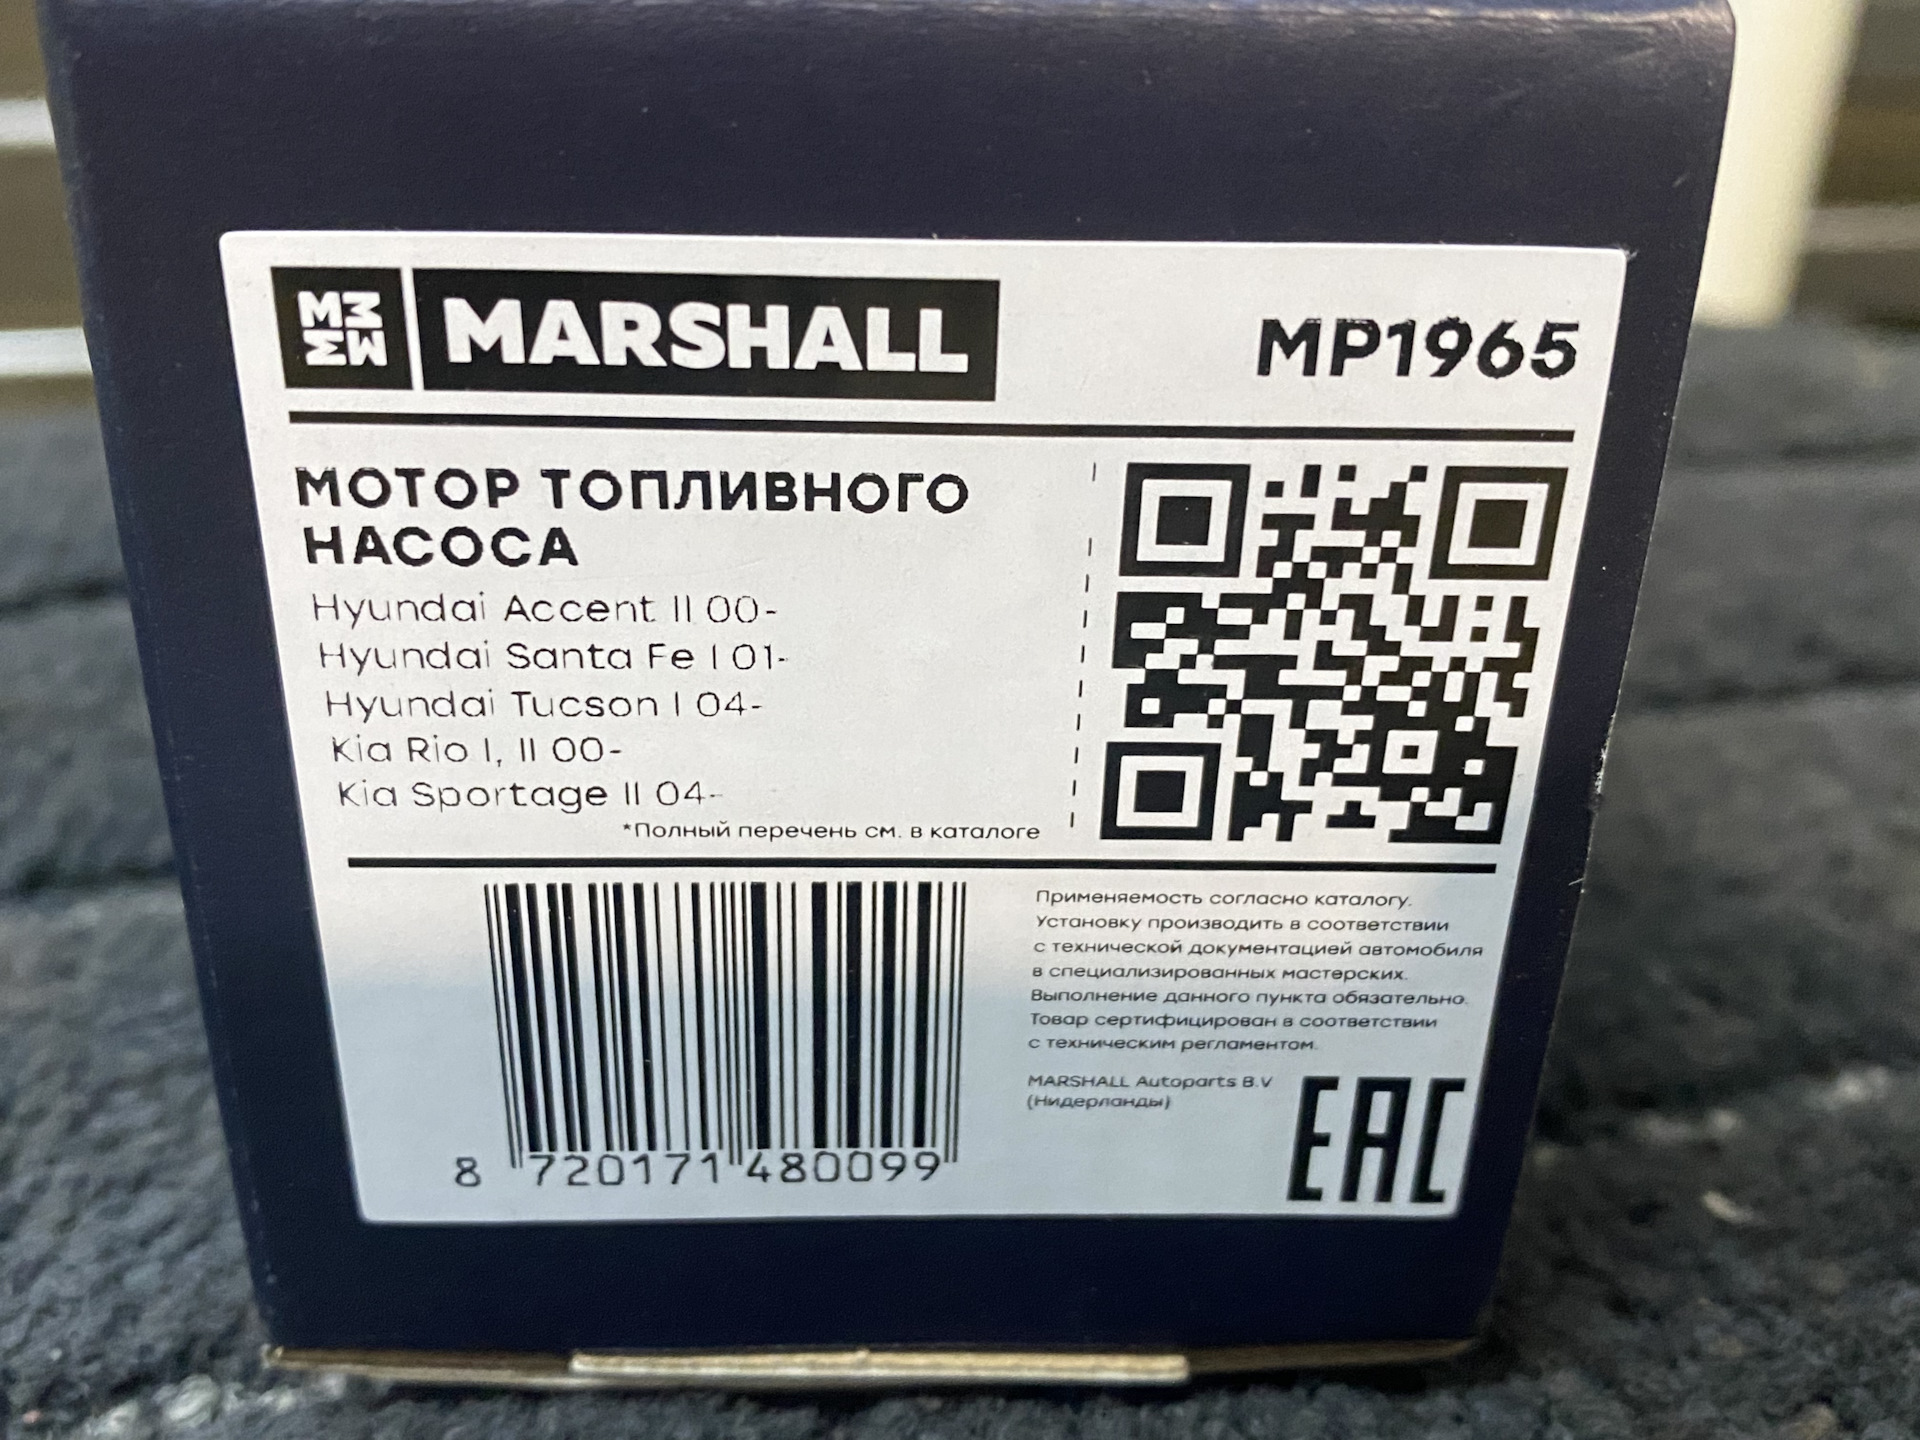 Mp7363 Marshall. Marshall mp5488. Фирма маршал производитель